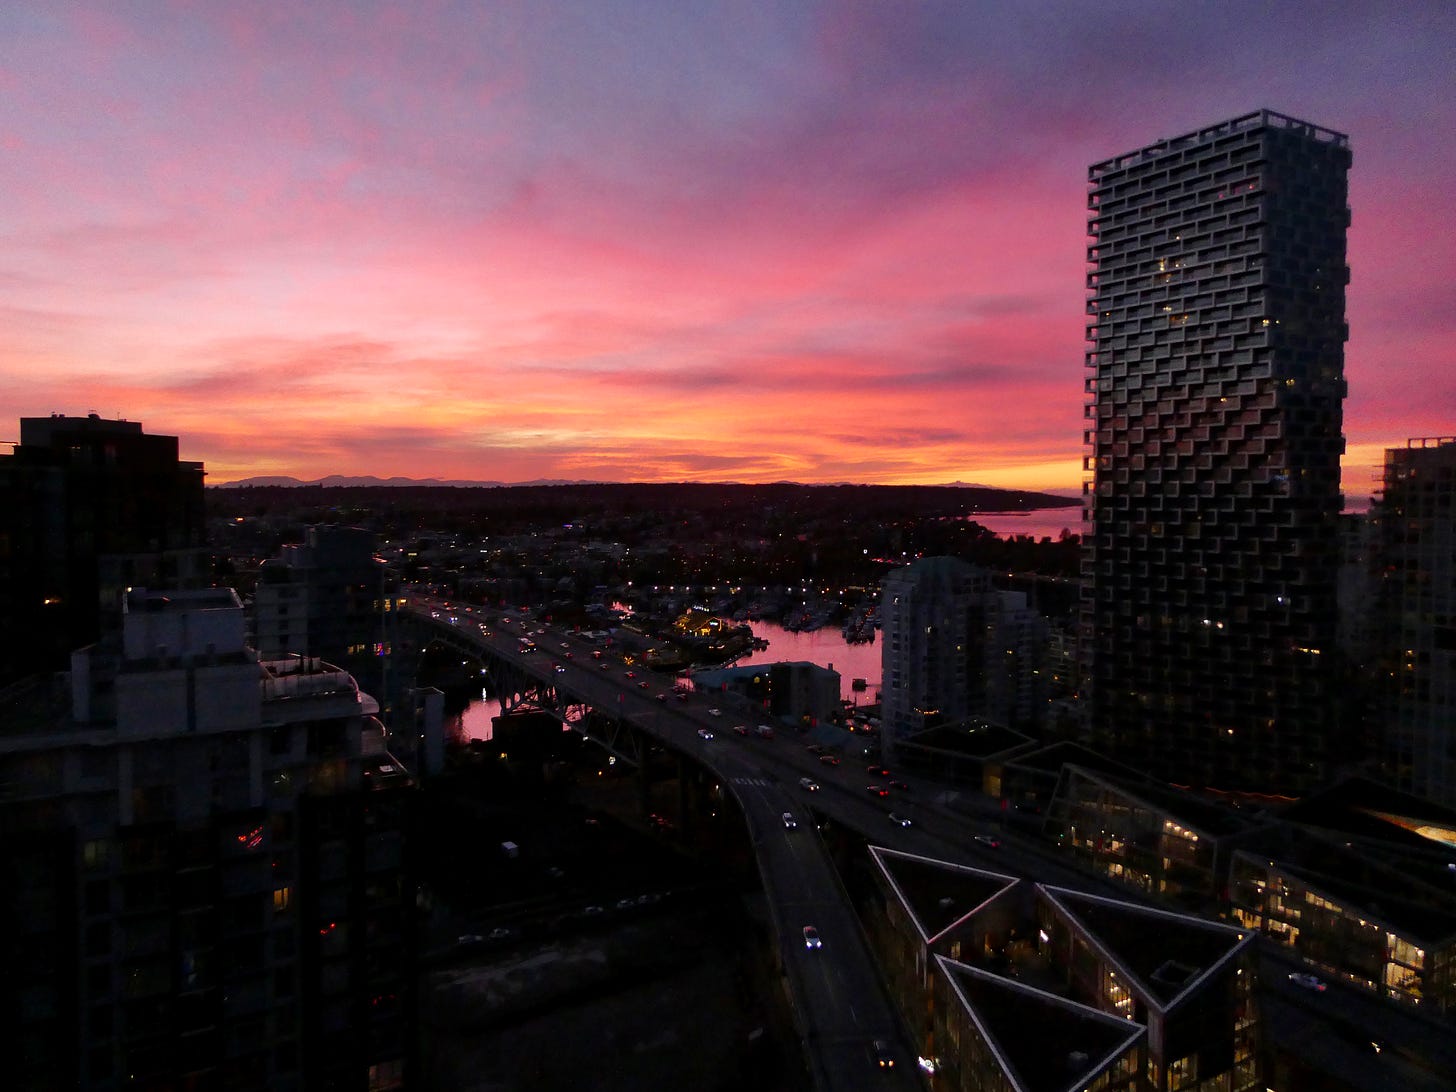 Purple, pink and orange sunset over Vancouver skyline